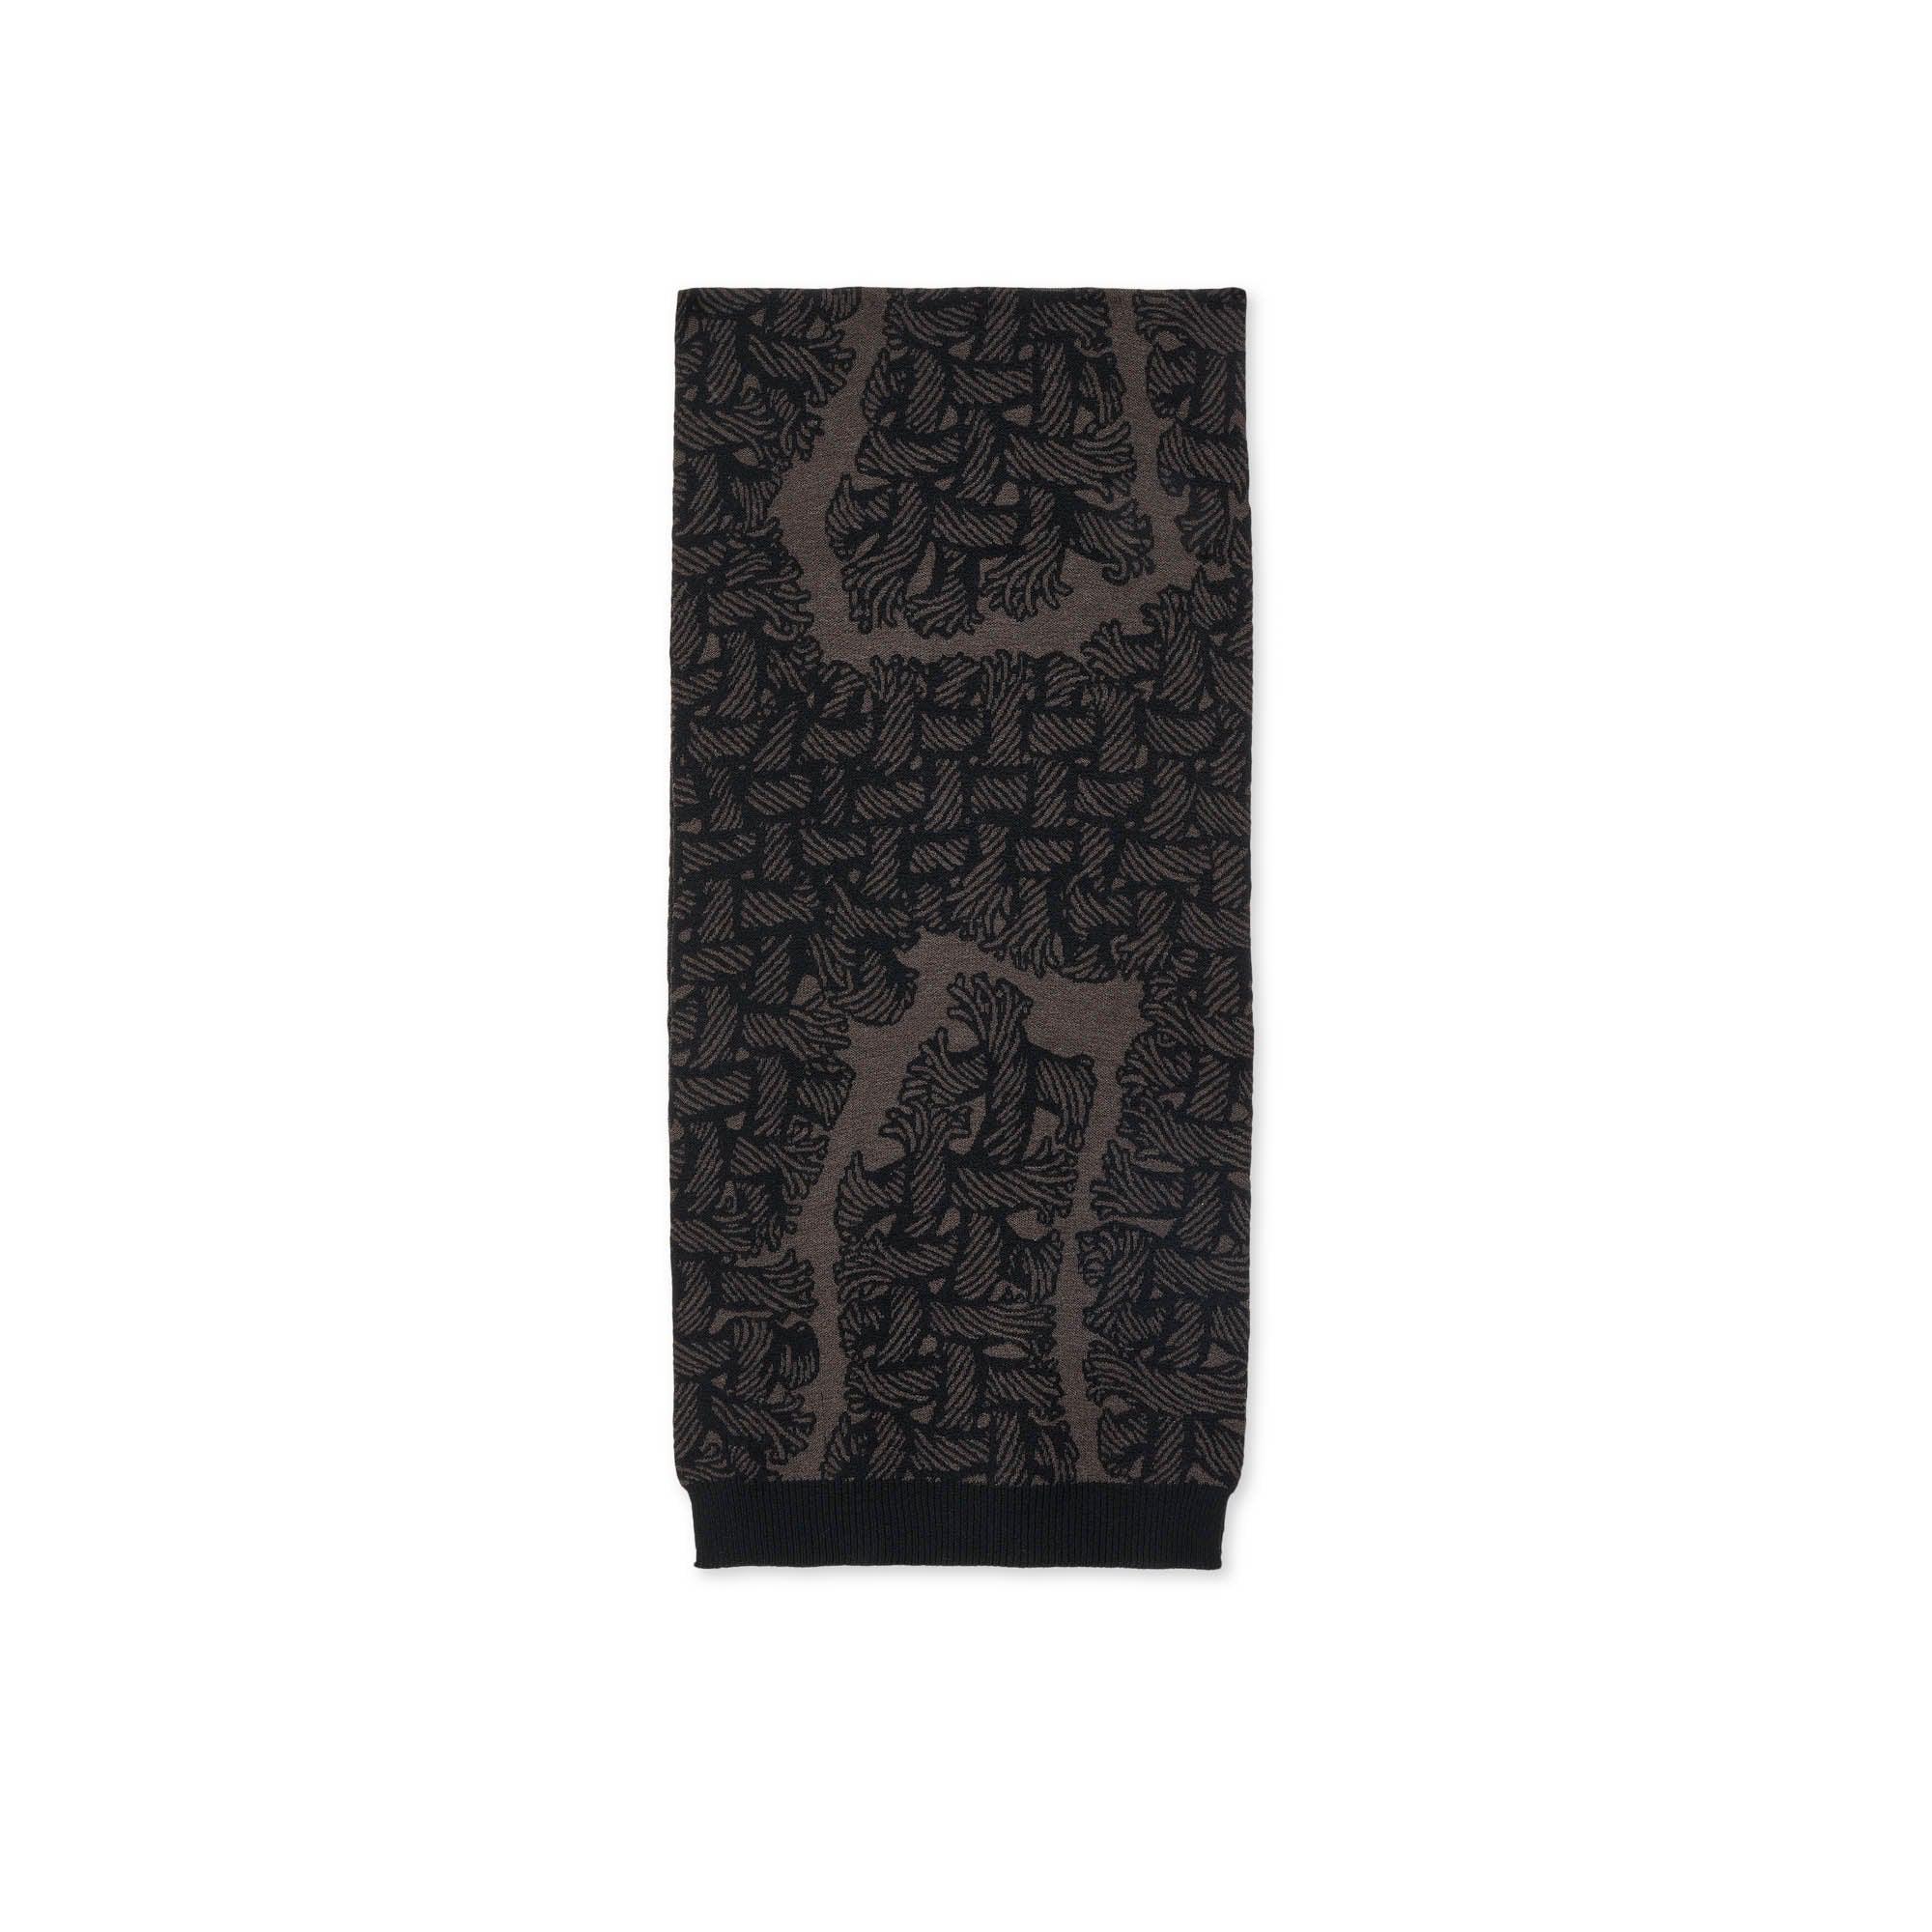 Nemeth Knitwear RV Scarf (Dark Brown) by CHRISTOPHER NEMETH